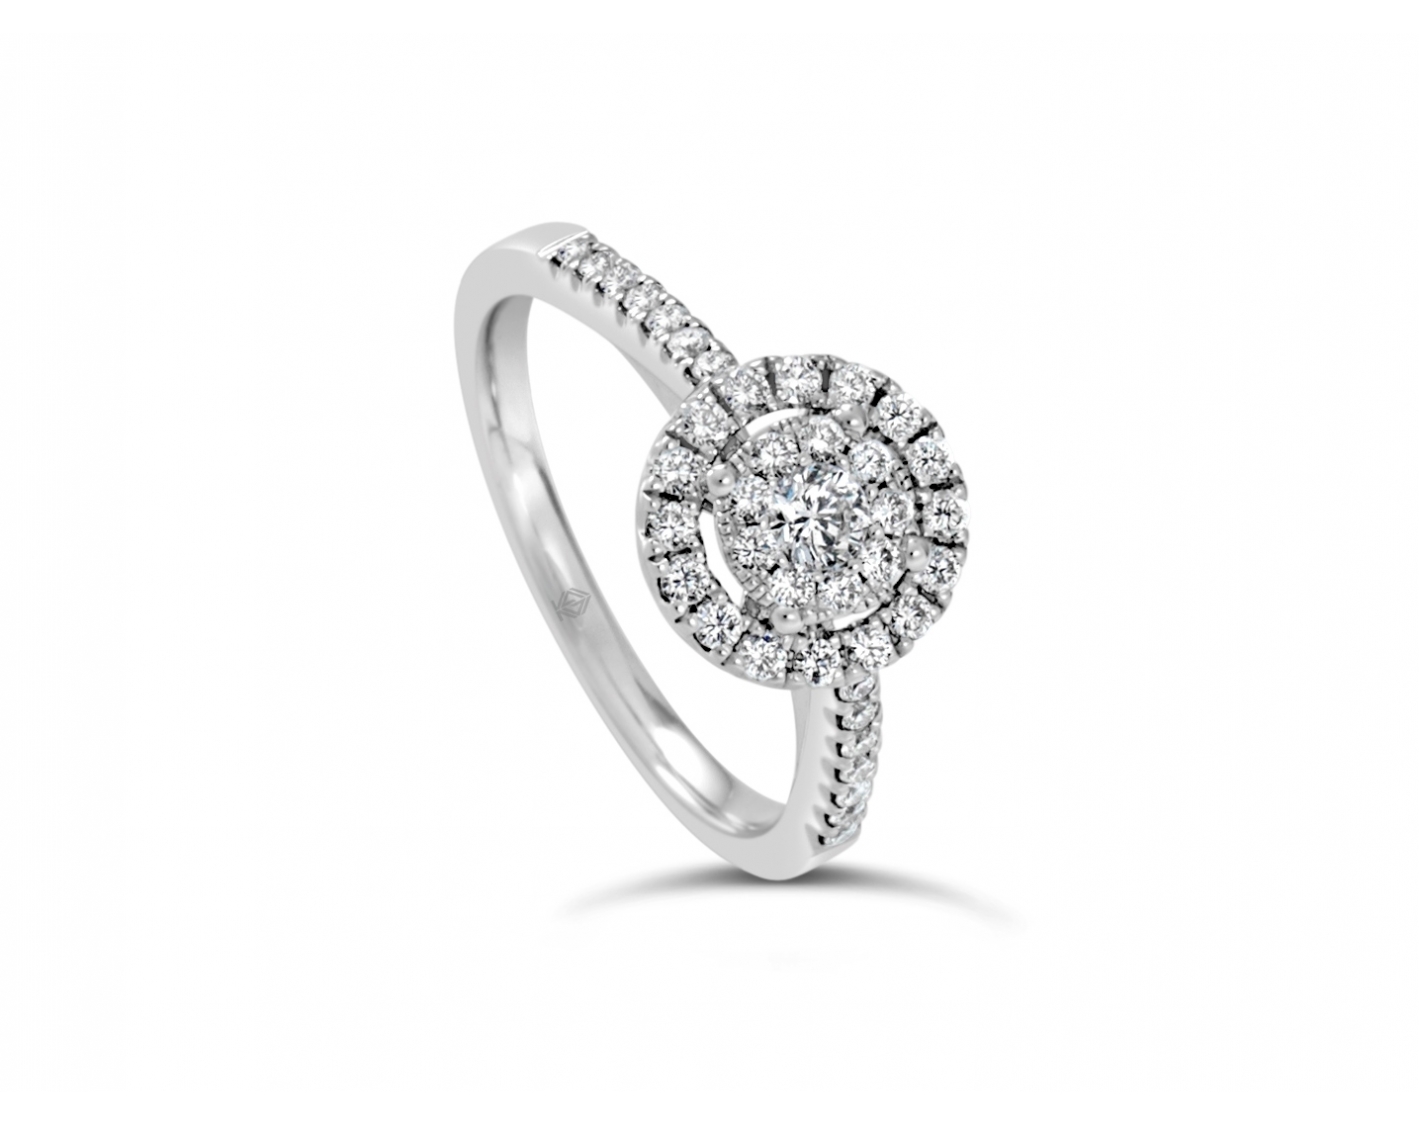 18k white gold halo illusion set engagement ring with pave set sidestones